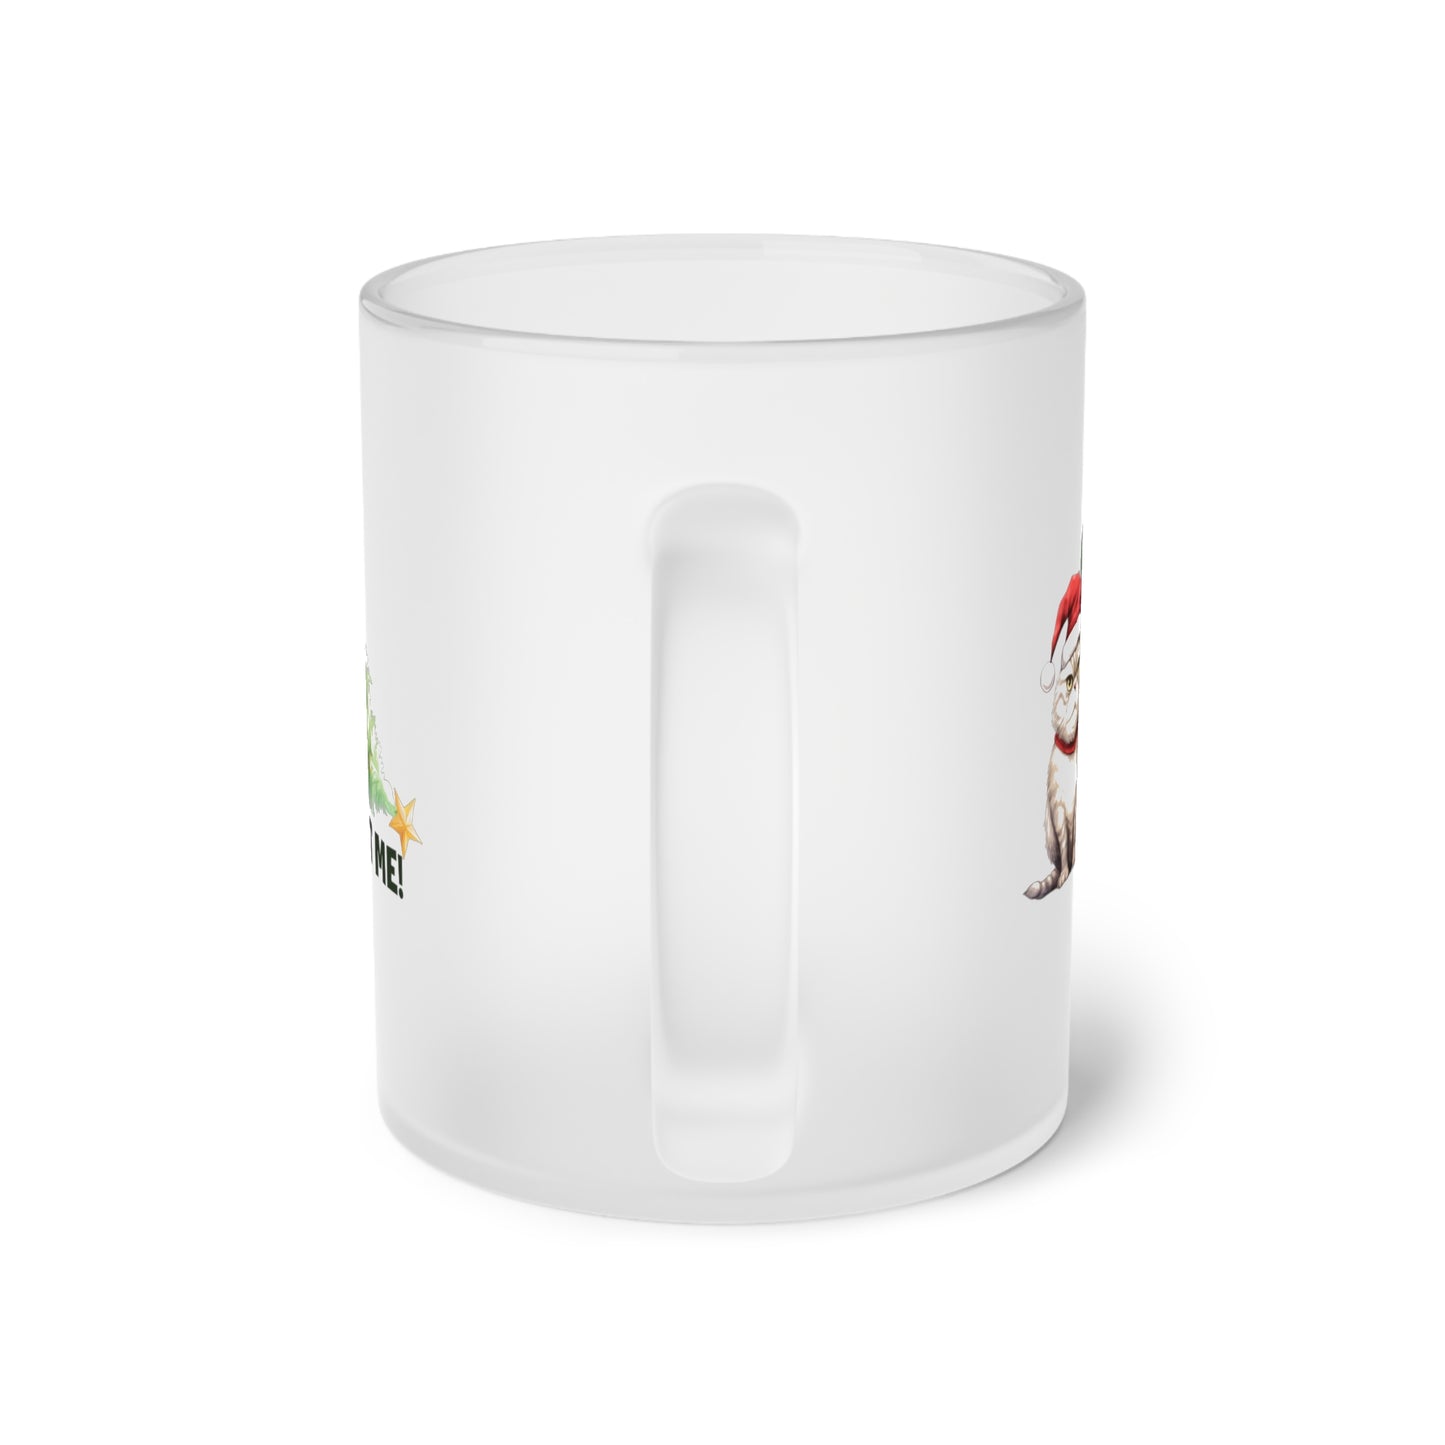 Frosted Glass Mug, Cute Christmas Mug, Cat Themed Holiday Mug, Frosted Mug, Cute Coffee Mug, Holiday Coffee Mug, Frosted Holiday Coffee Mug